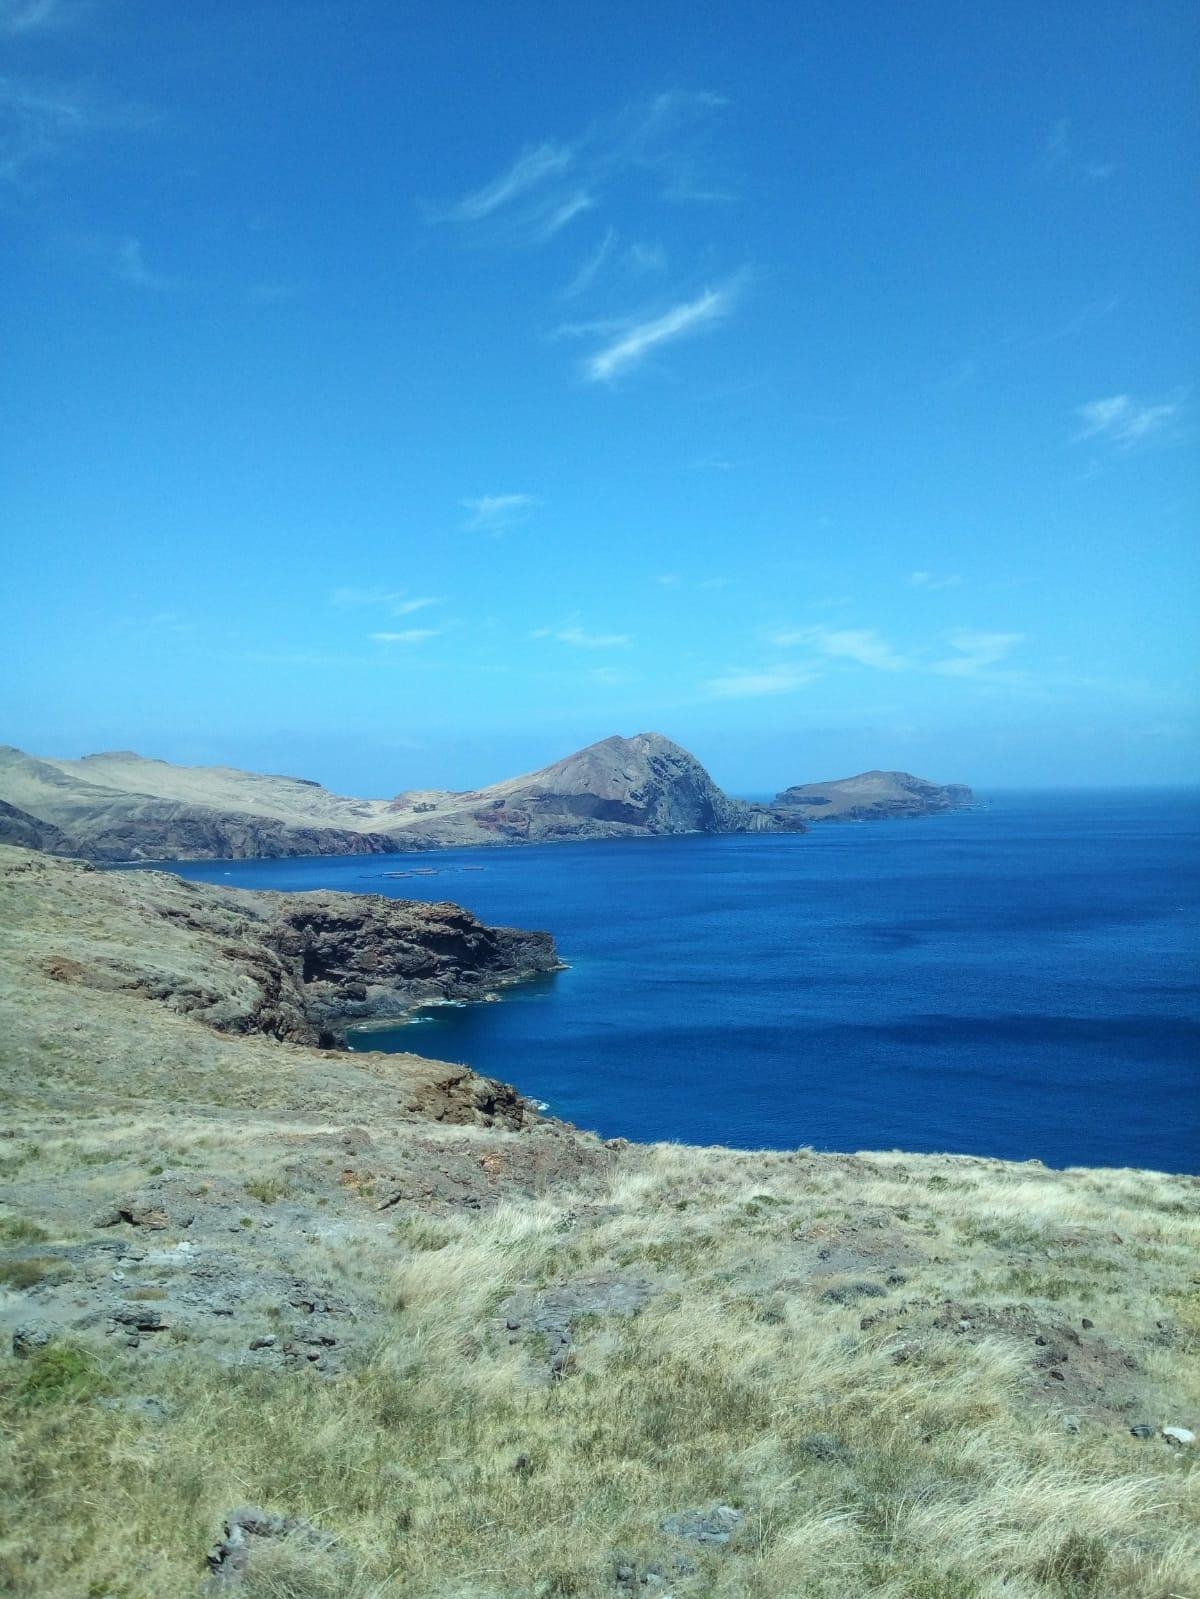 Madeira lässt grüßen ☀️🌸
#Urlaub #reise #travel #natur #outdoor #wandern 